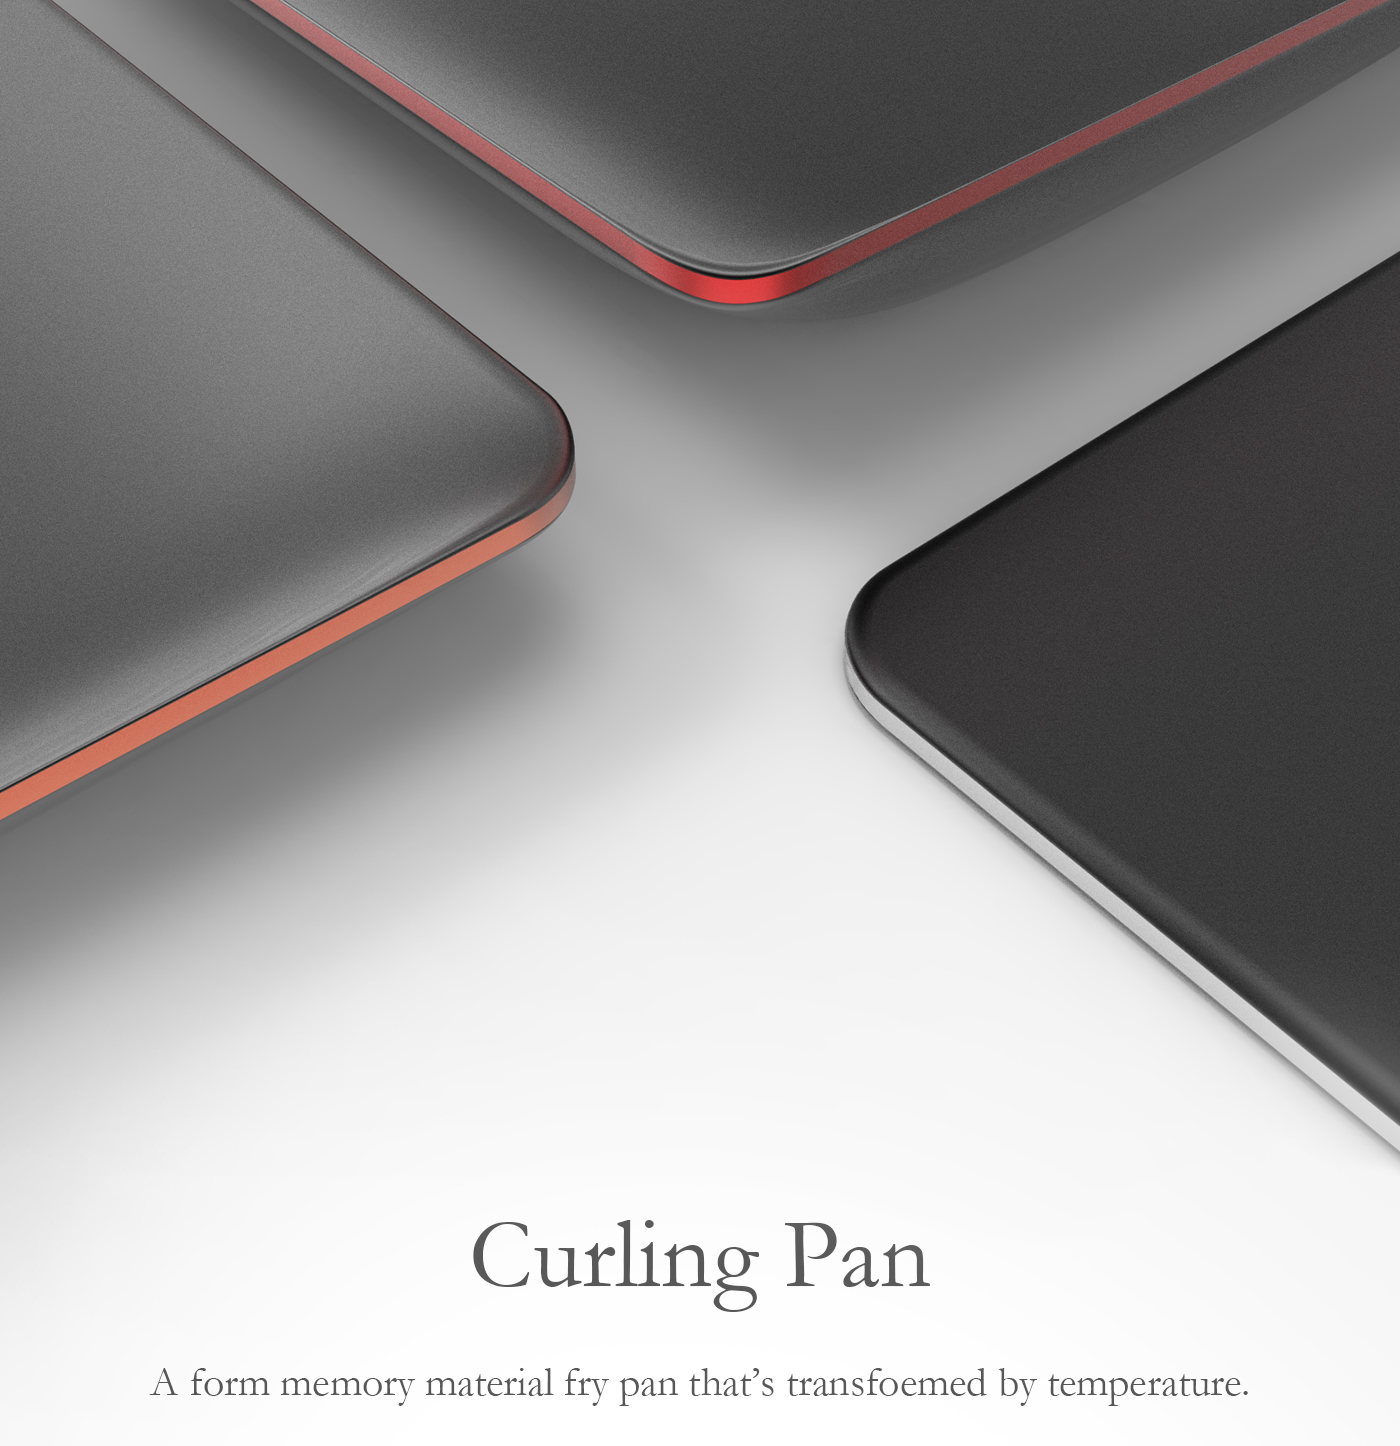 Pan reddot best of best sadi lee juan design product concept industrial branding 